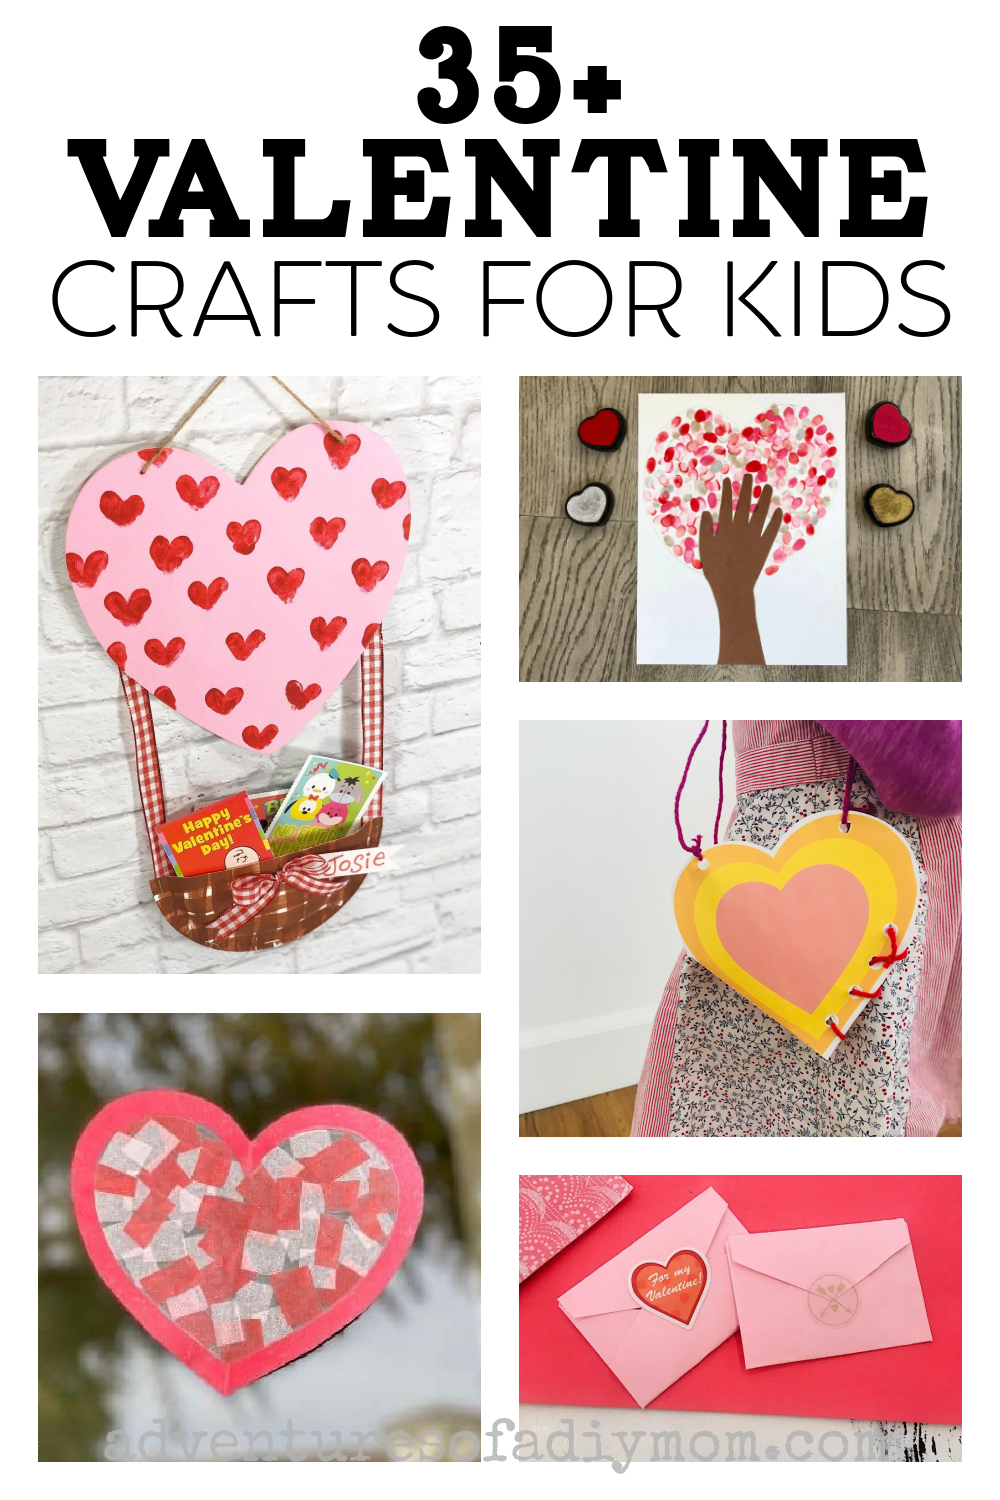 35+ Valentine Crafts for Kids - Adventures of a DIY Mom